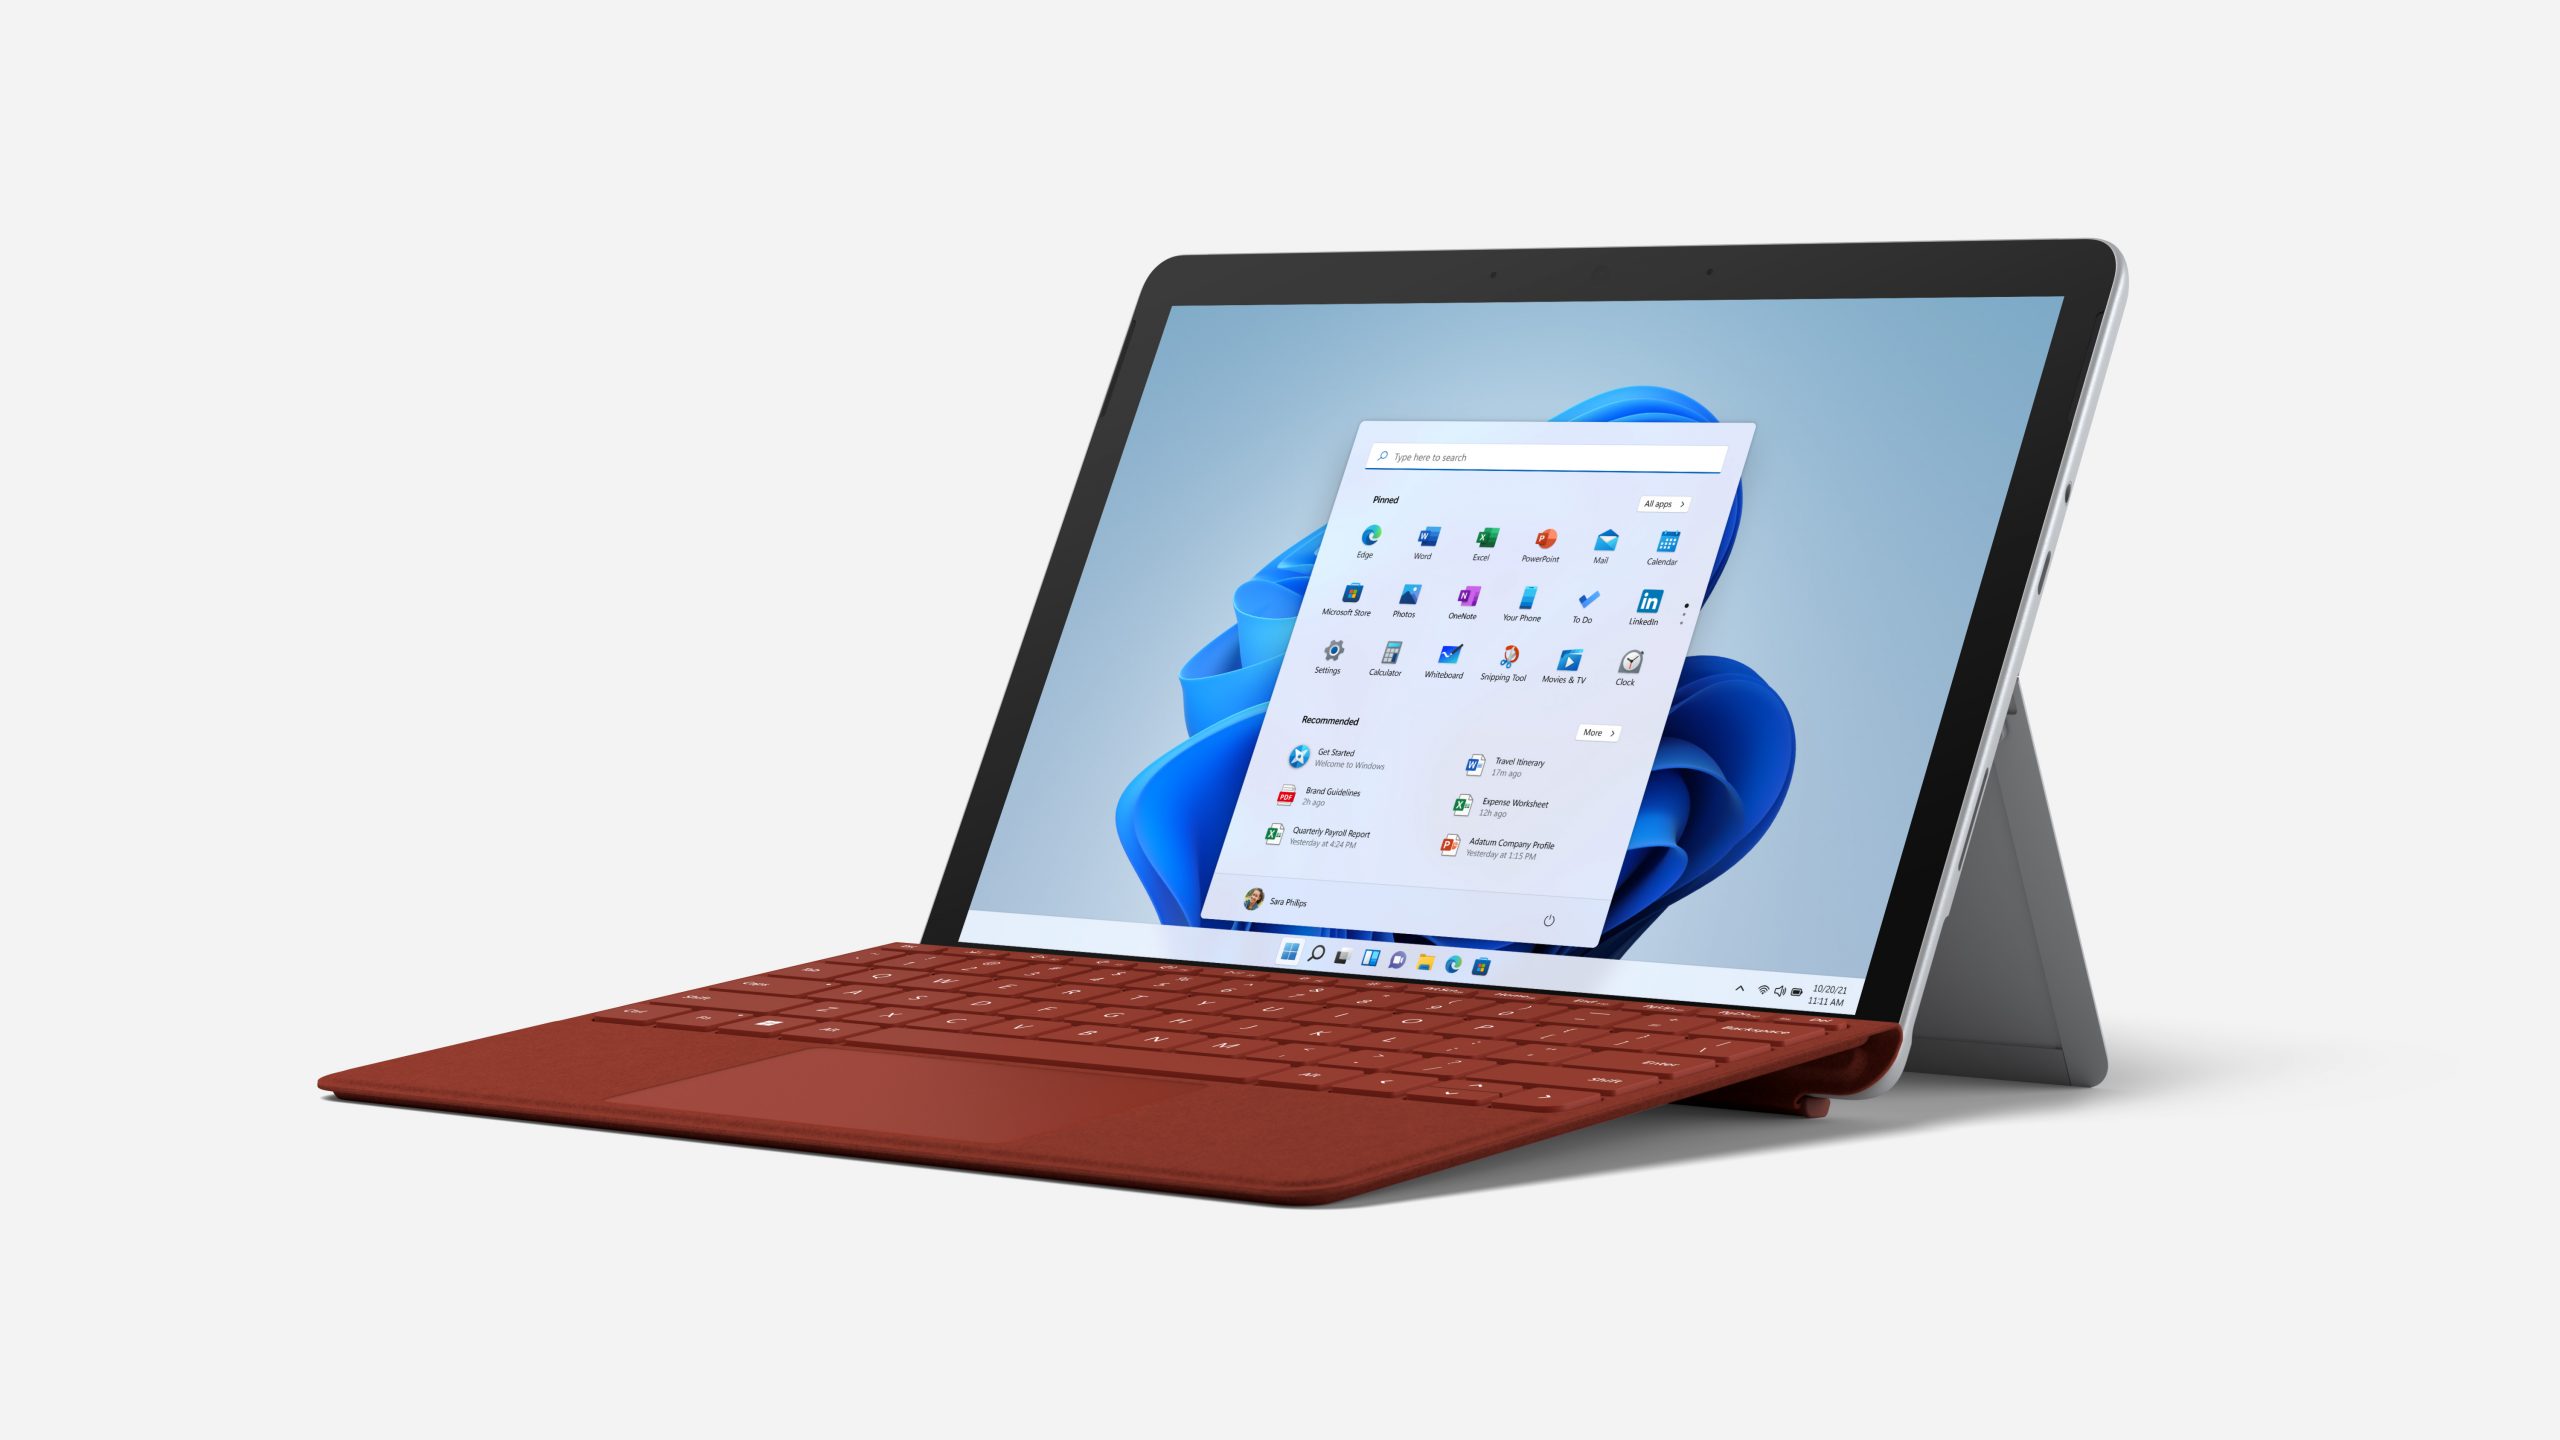 Microsoft เปิดตัว Surface GO 3 4G LTE ราคาเริ่มต้น 16,000 บาท